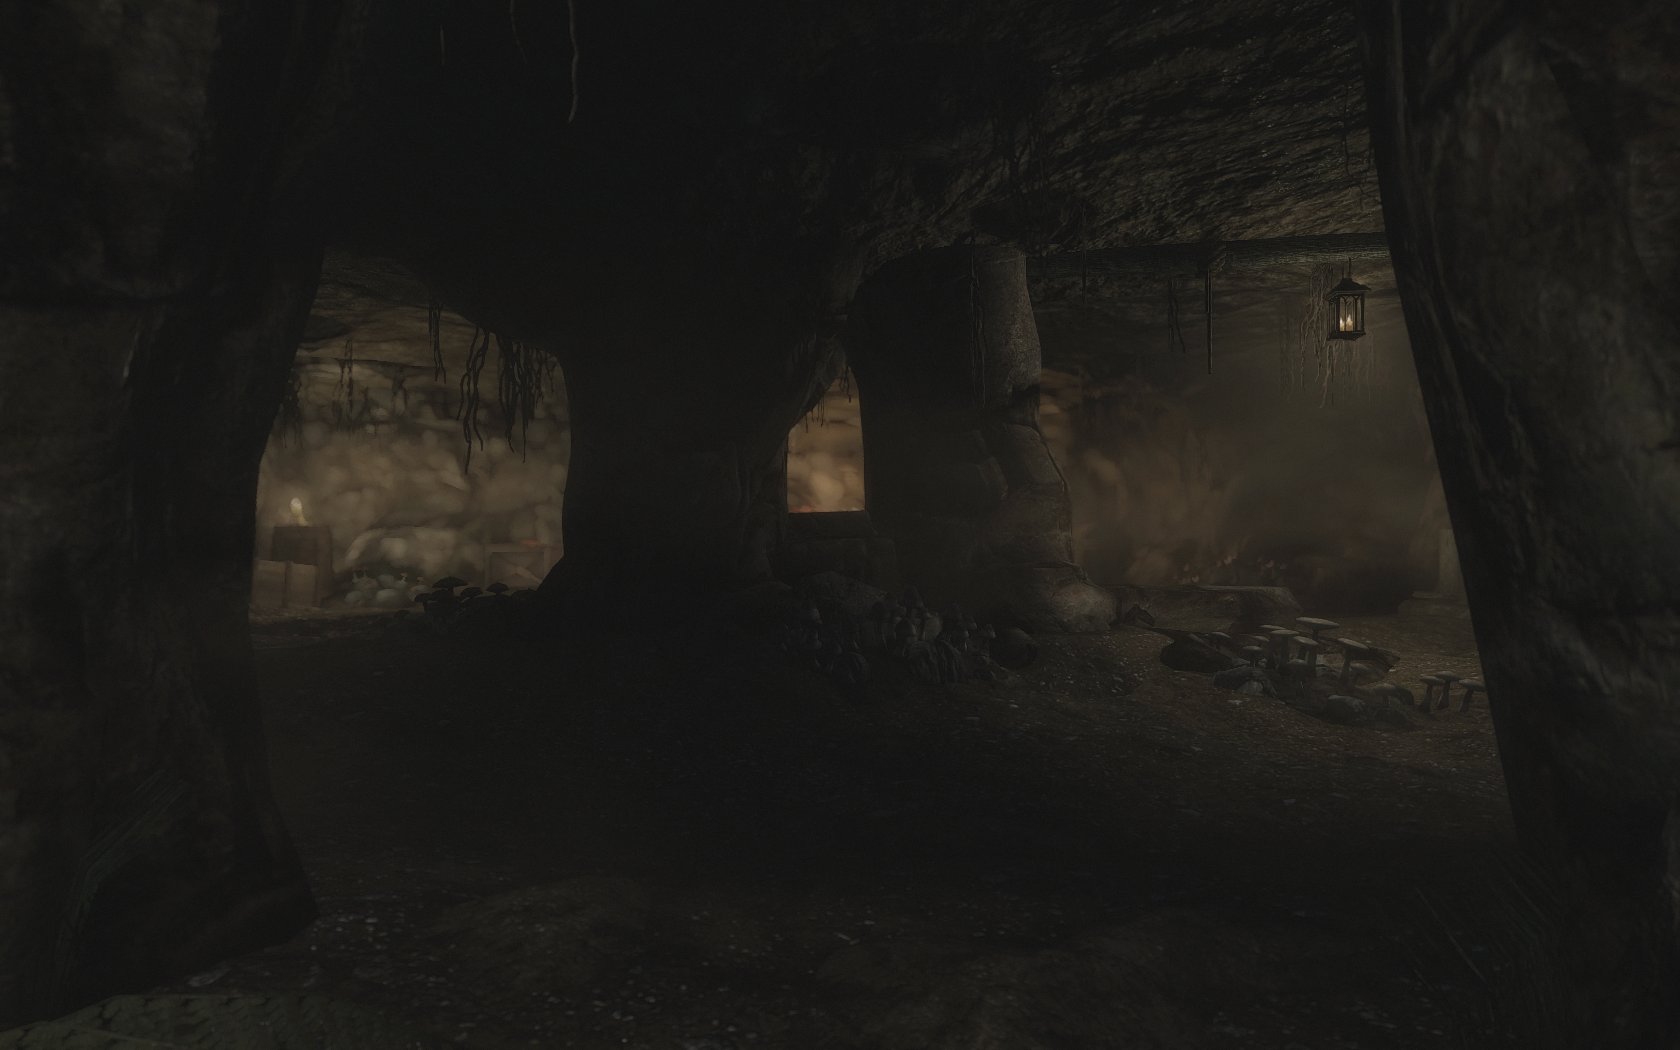 Nodeken このenbプリセットの良い点は洞窟が内部があまり暗くないところです と思ったんだけどrampageは洞窟 内はかなり暗いので明るいと逆に違和感がありますね 暗いほうが自然な気がしてきて落ち着かない